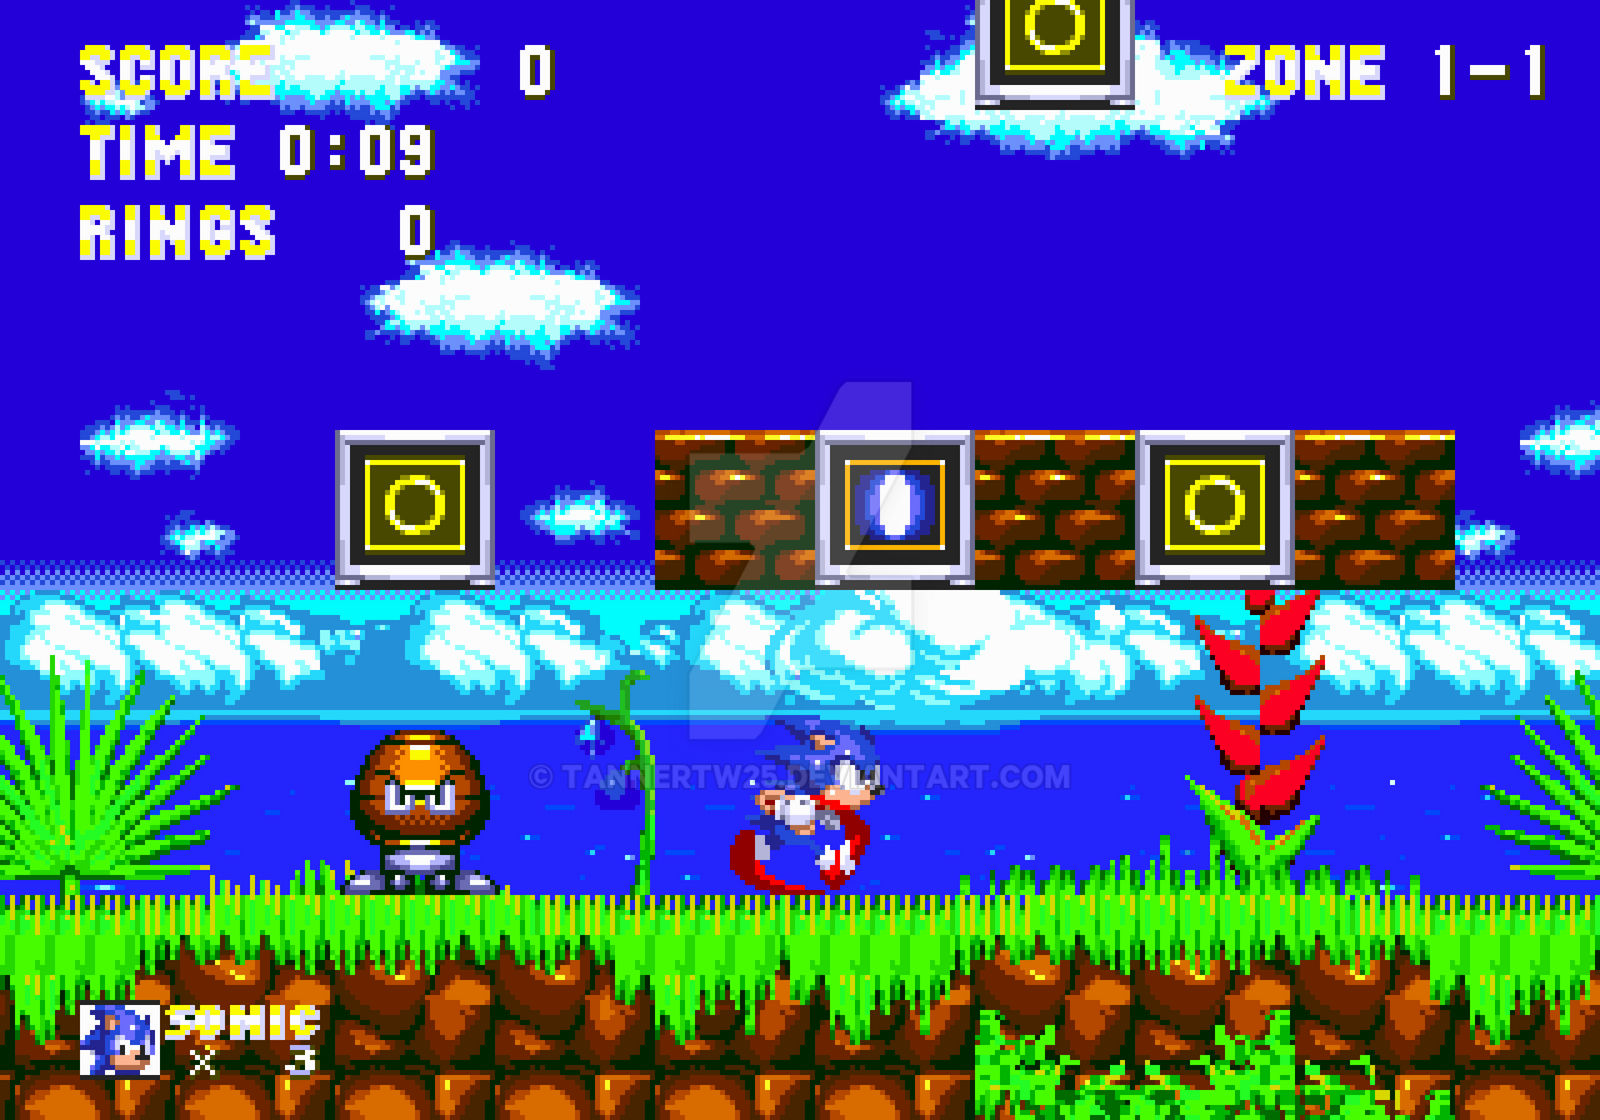 Sonic 3 Styled Hyper Sonic by TannerTW25 on DeviantArt